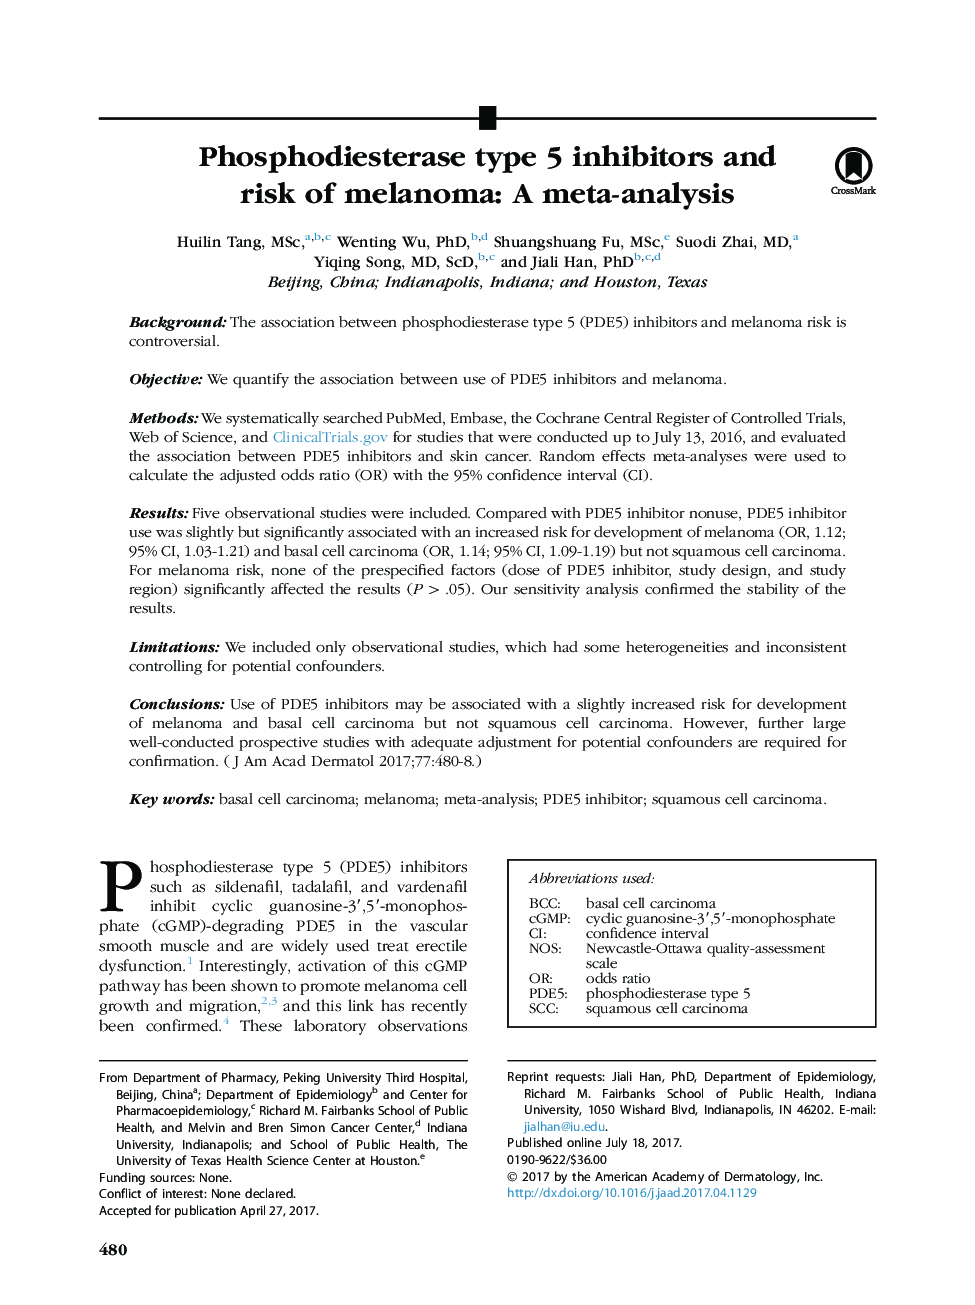 Phosphodiesterase type 5 inhibitors and risk of melanoma: A meta-analysis